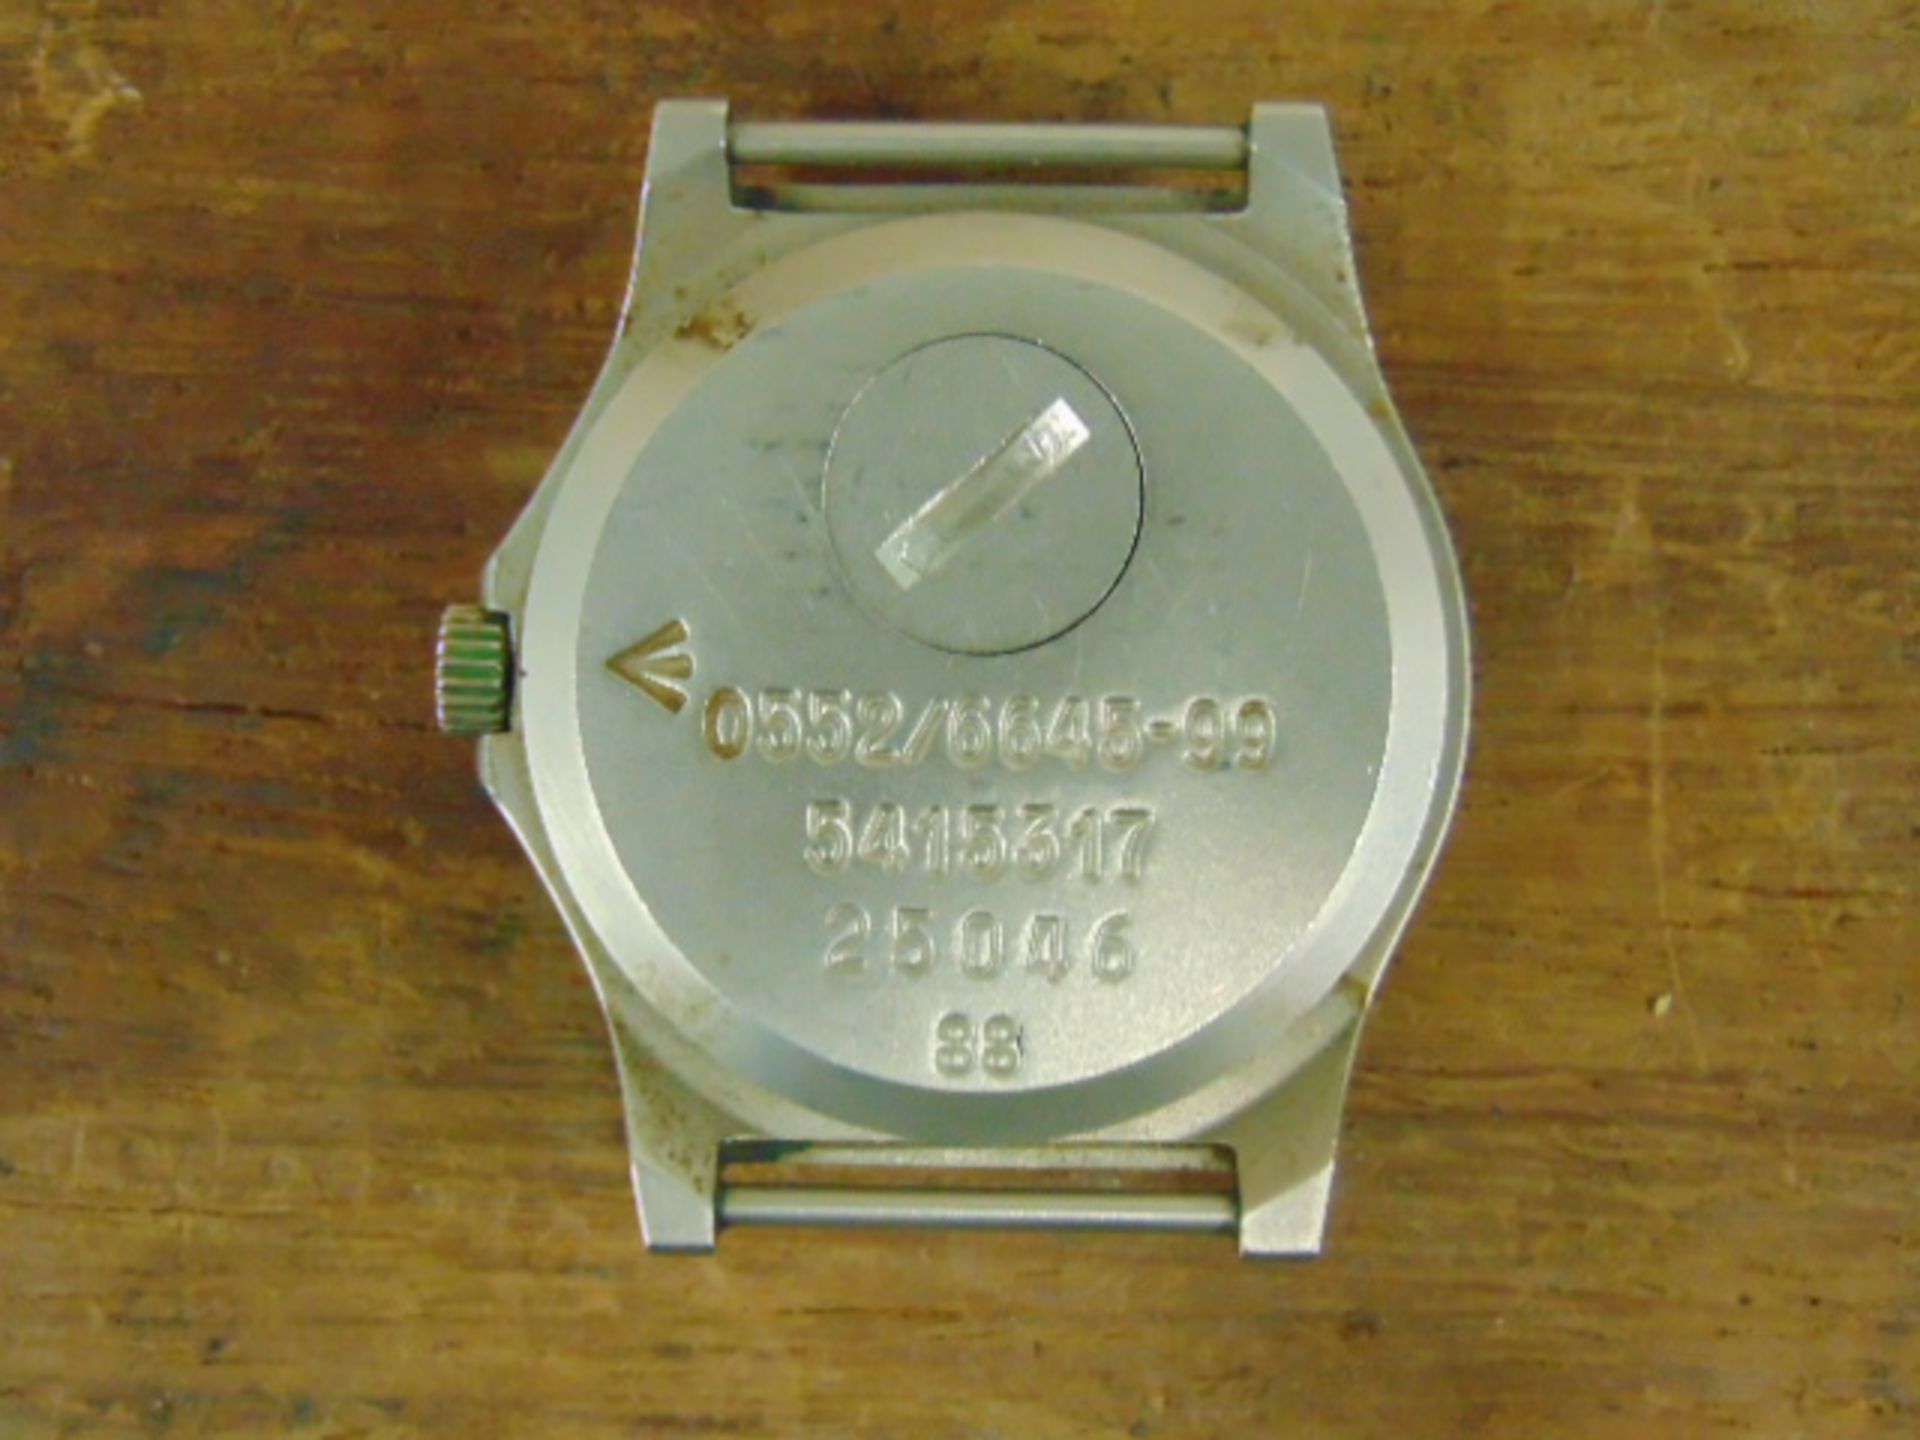 Royal Marines, Navy issue 0555, CWC quartz wrist watch - Image 5 of 5